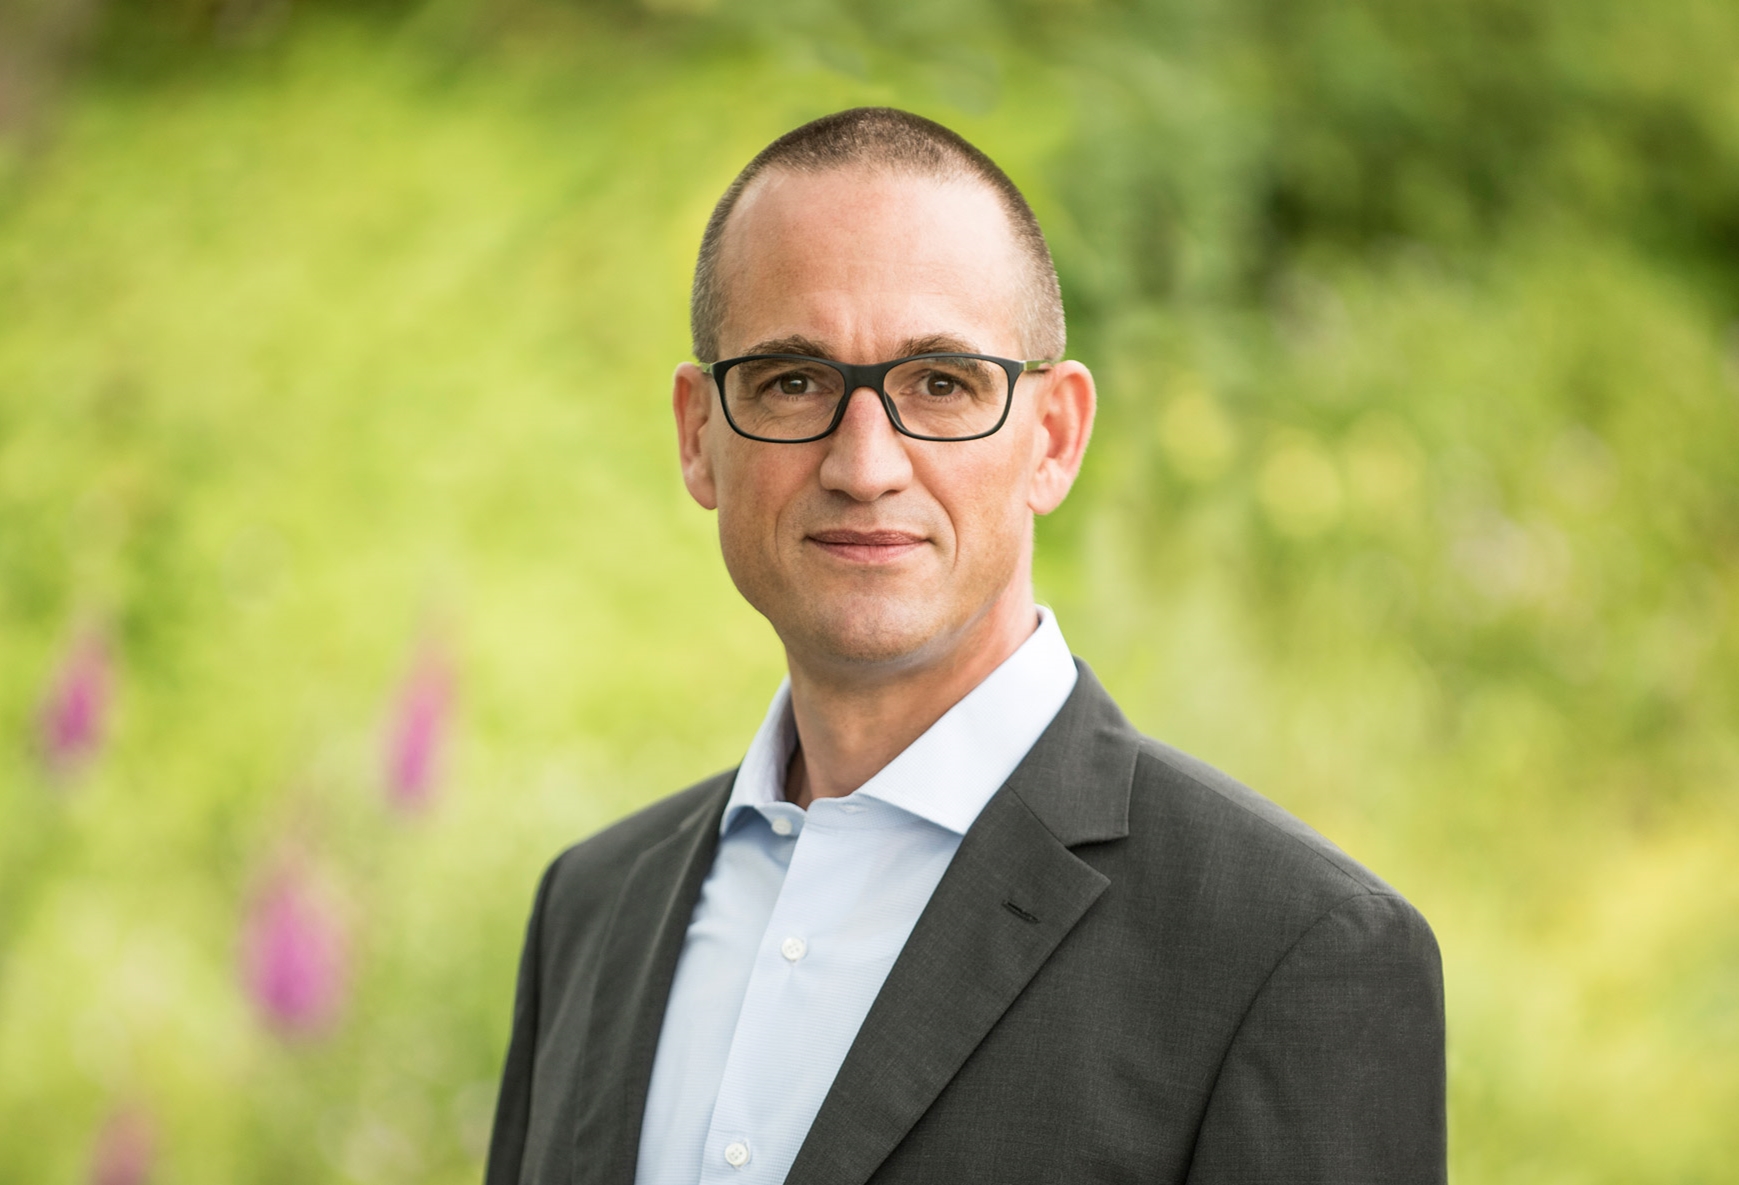 Interview with Georg Boonen – CEO, Max Zeller, Switzerland